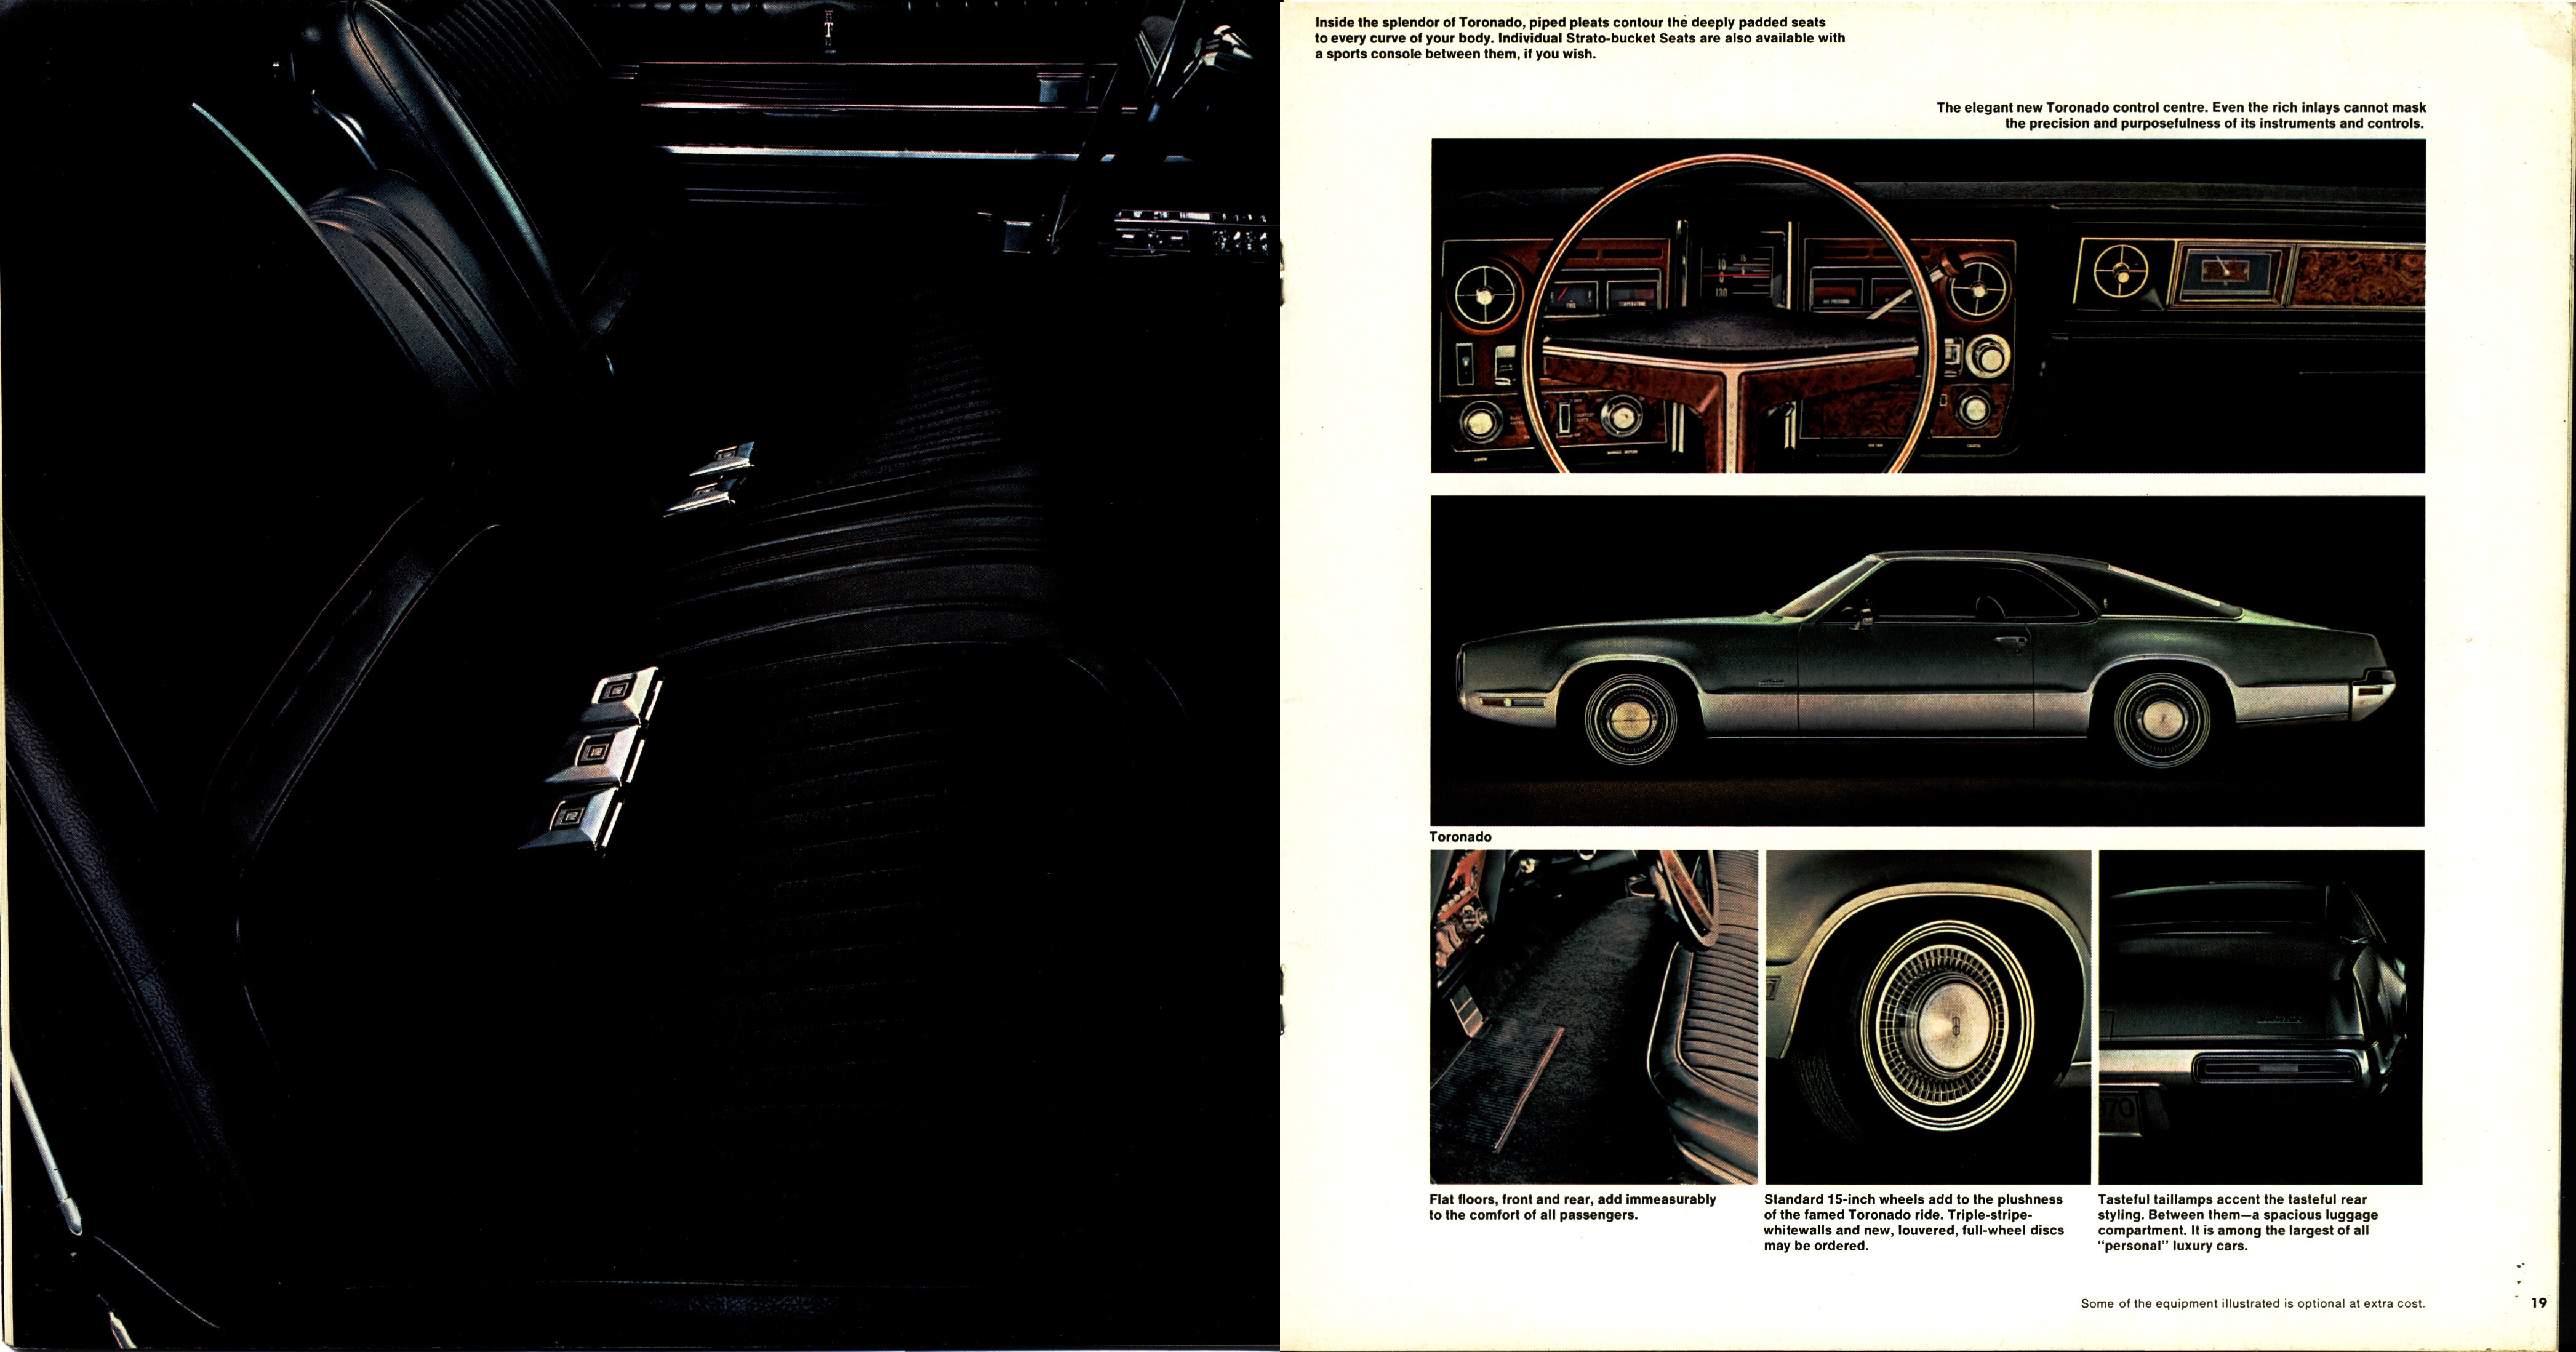 1970 Oldsmobile Full Line Brochure Canada 18-19